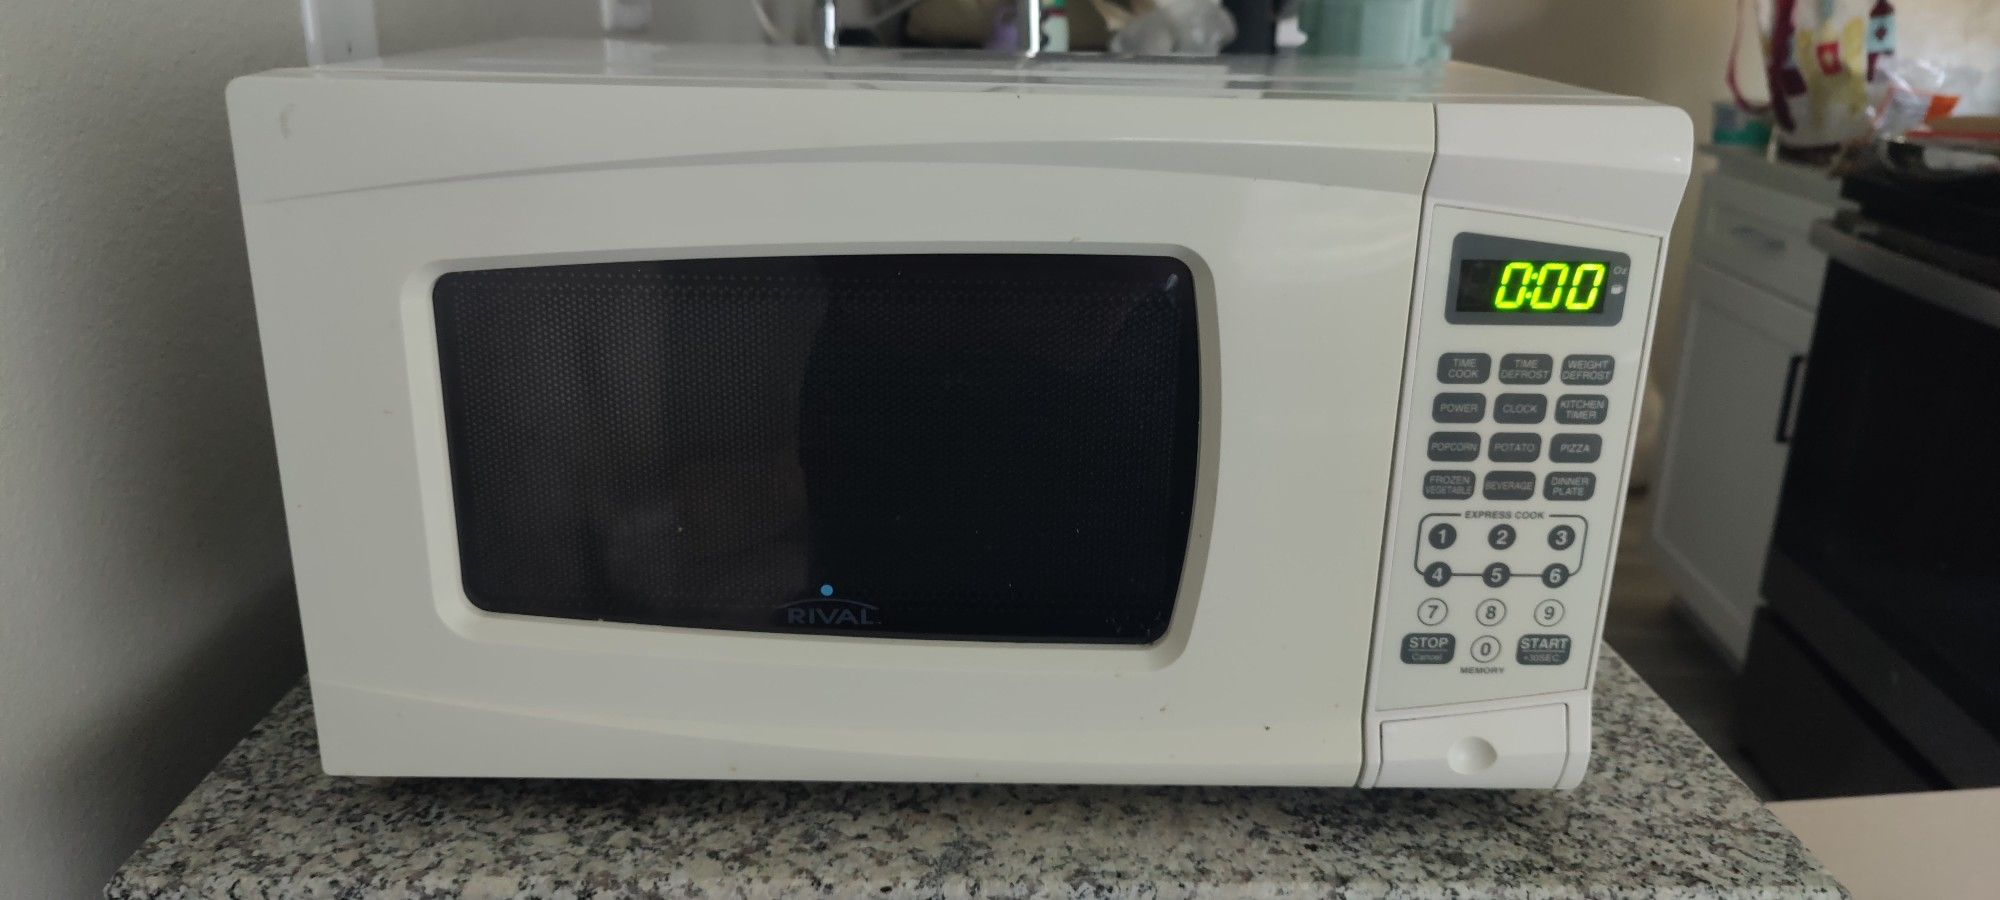 700 Watt Microwave 